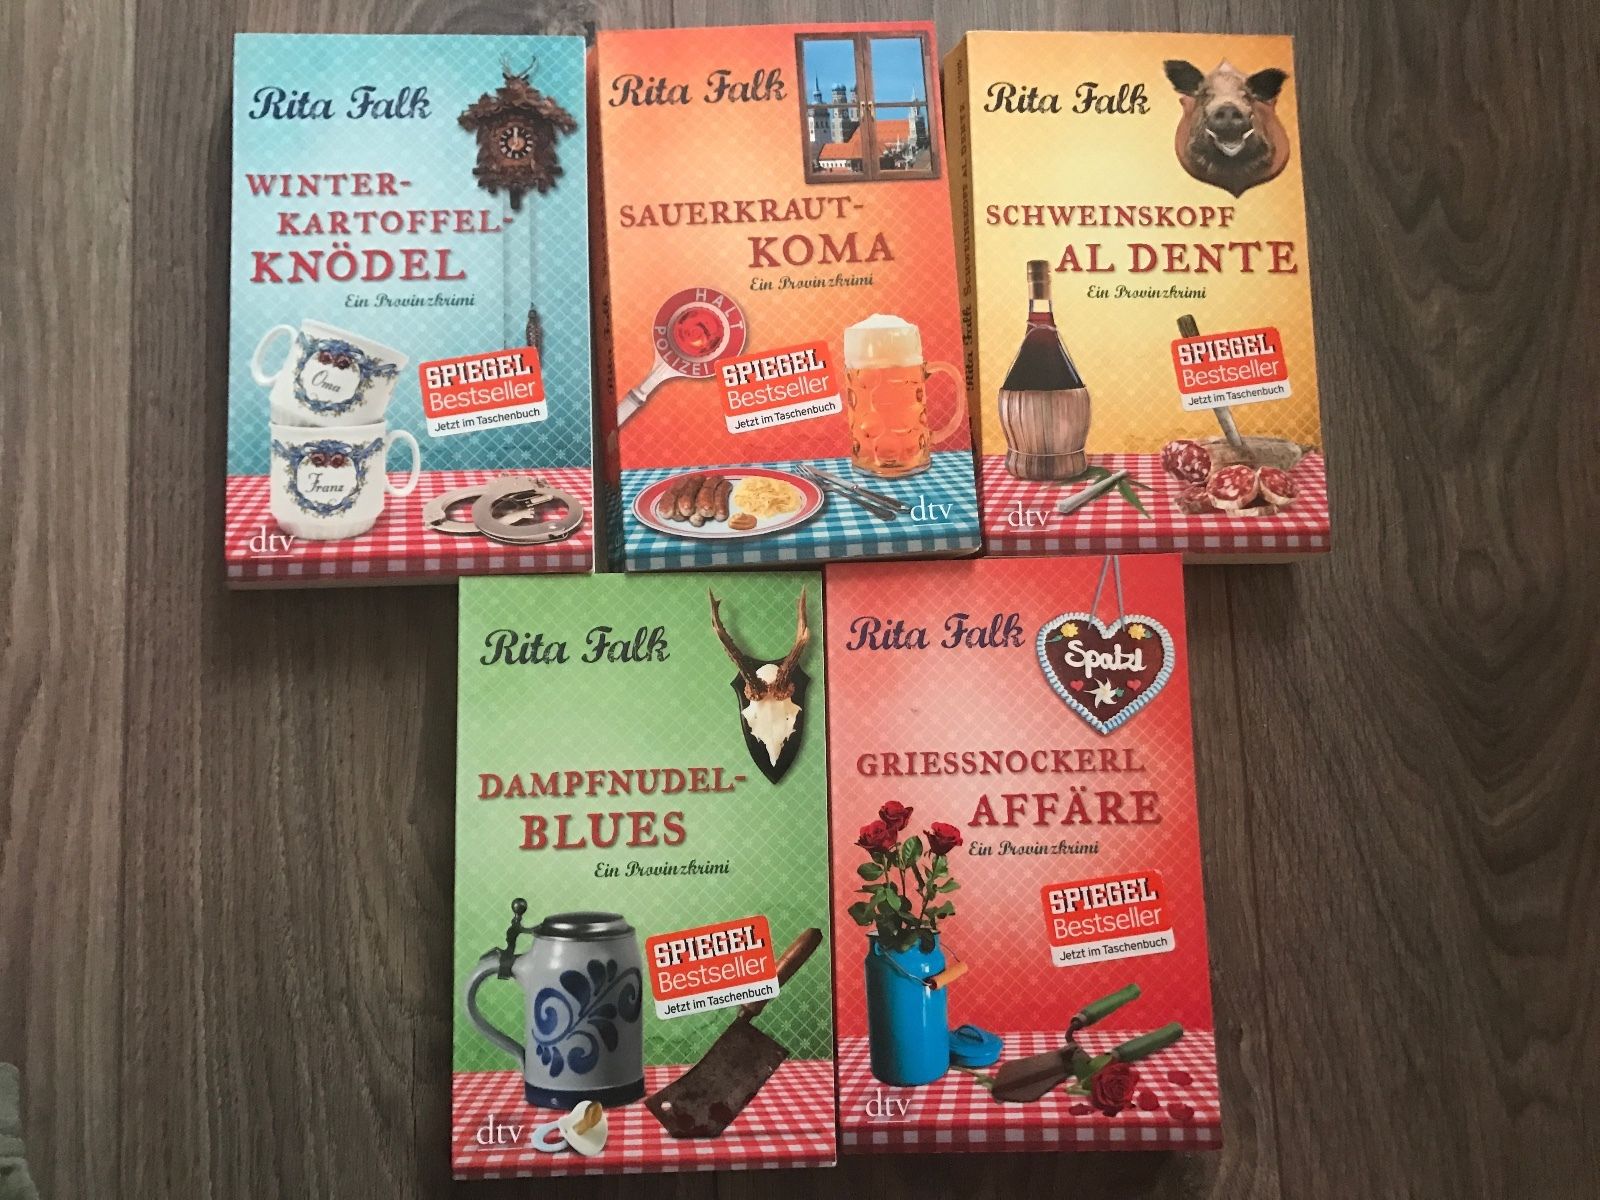 Bücherpaket Bücher von Rita Falk - Grießnockerlaffäre, Dampfnudelblues etc.